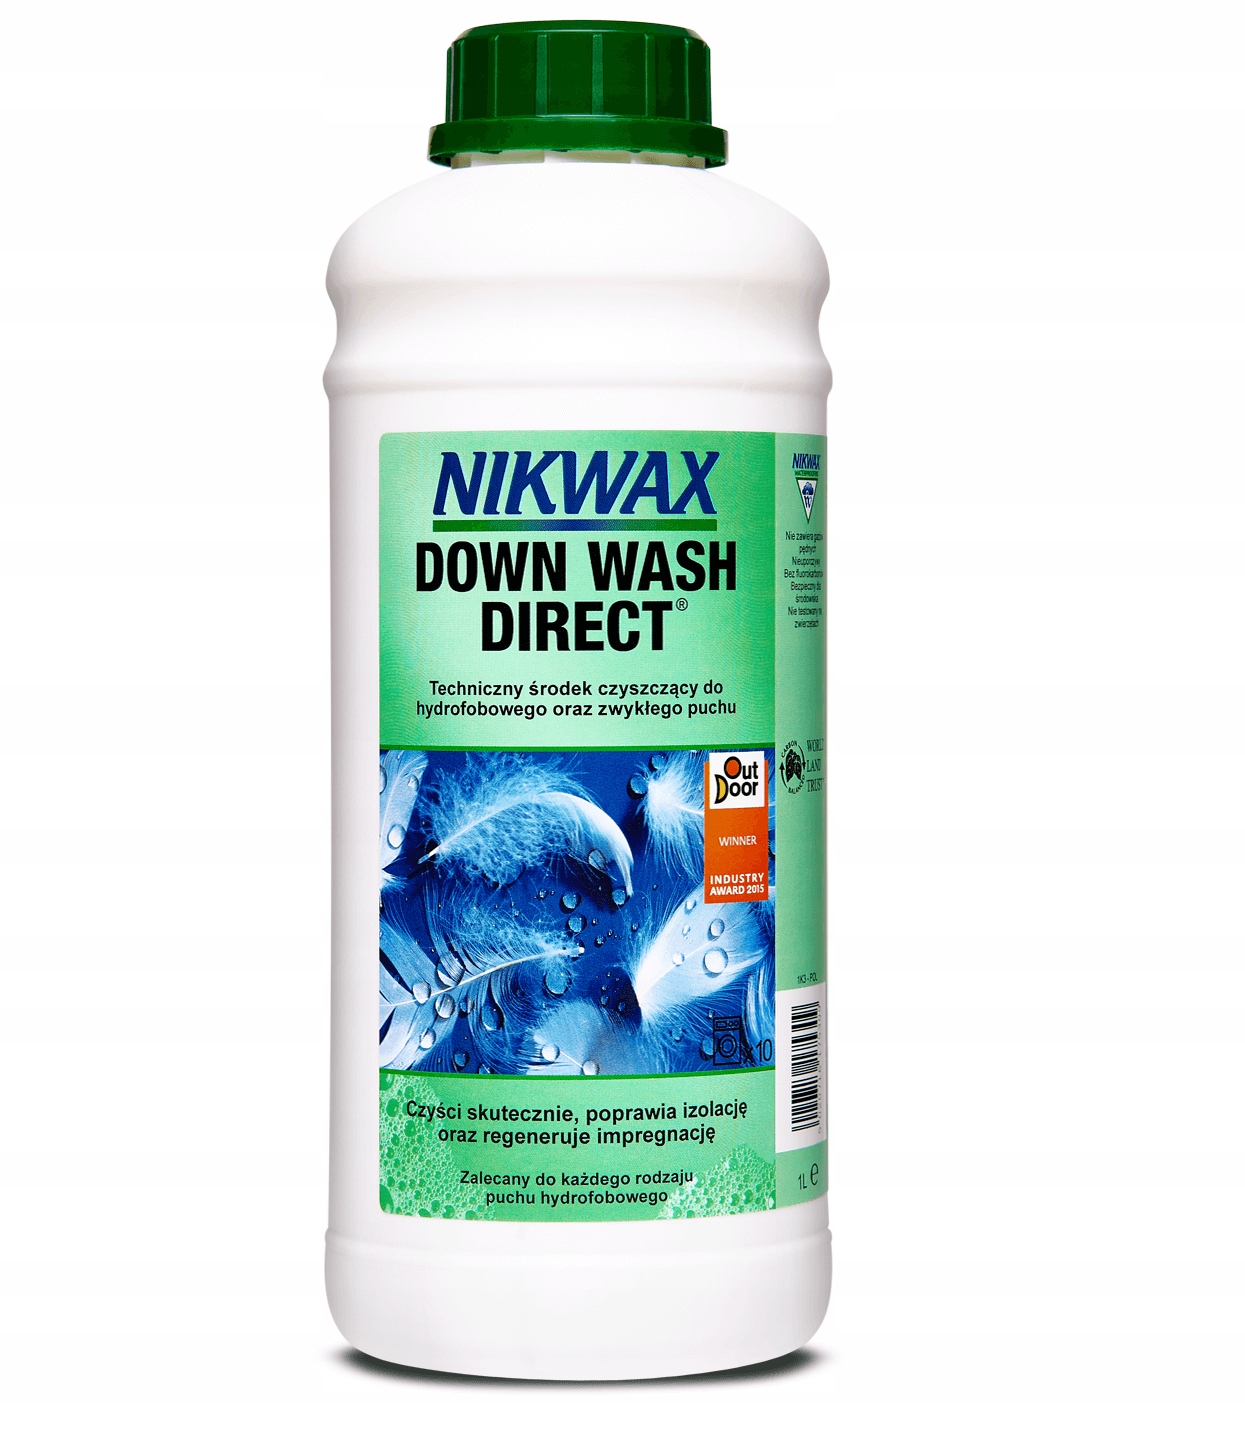 NIKWAX Down Wash Direct + Down Proof 2x300ml PUFF za 513 Kč - Allegro